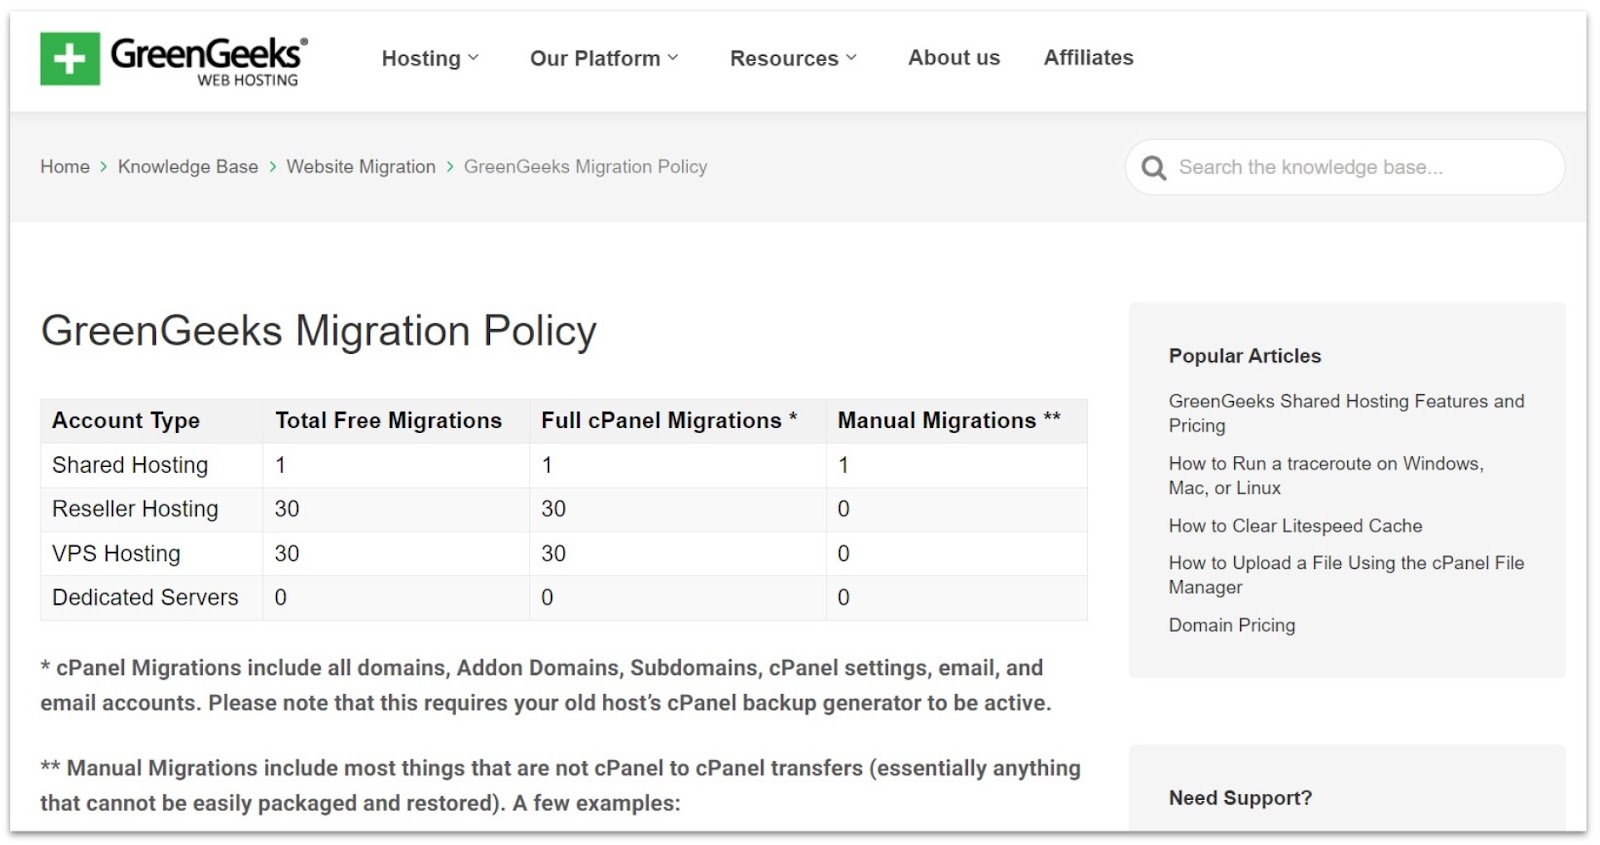 GreenGeeks' free website migration policy